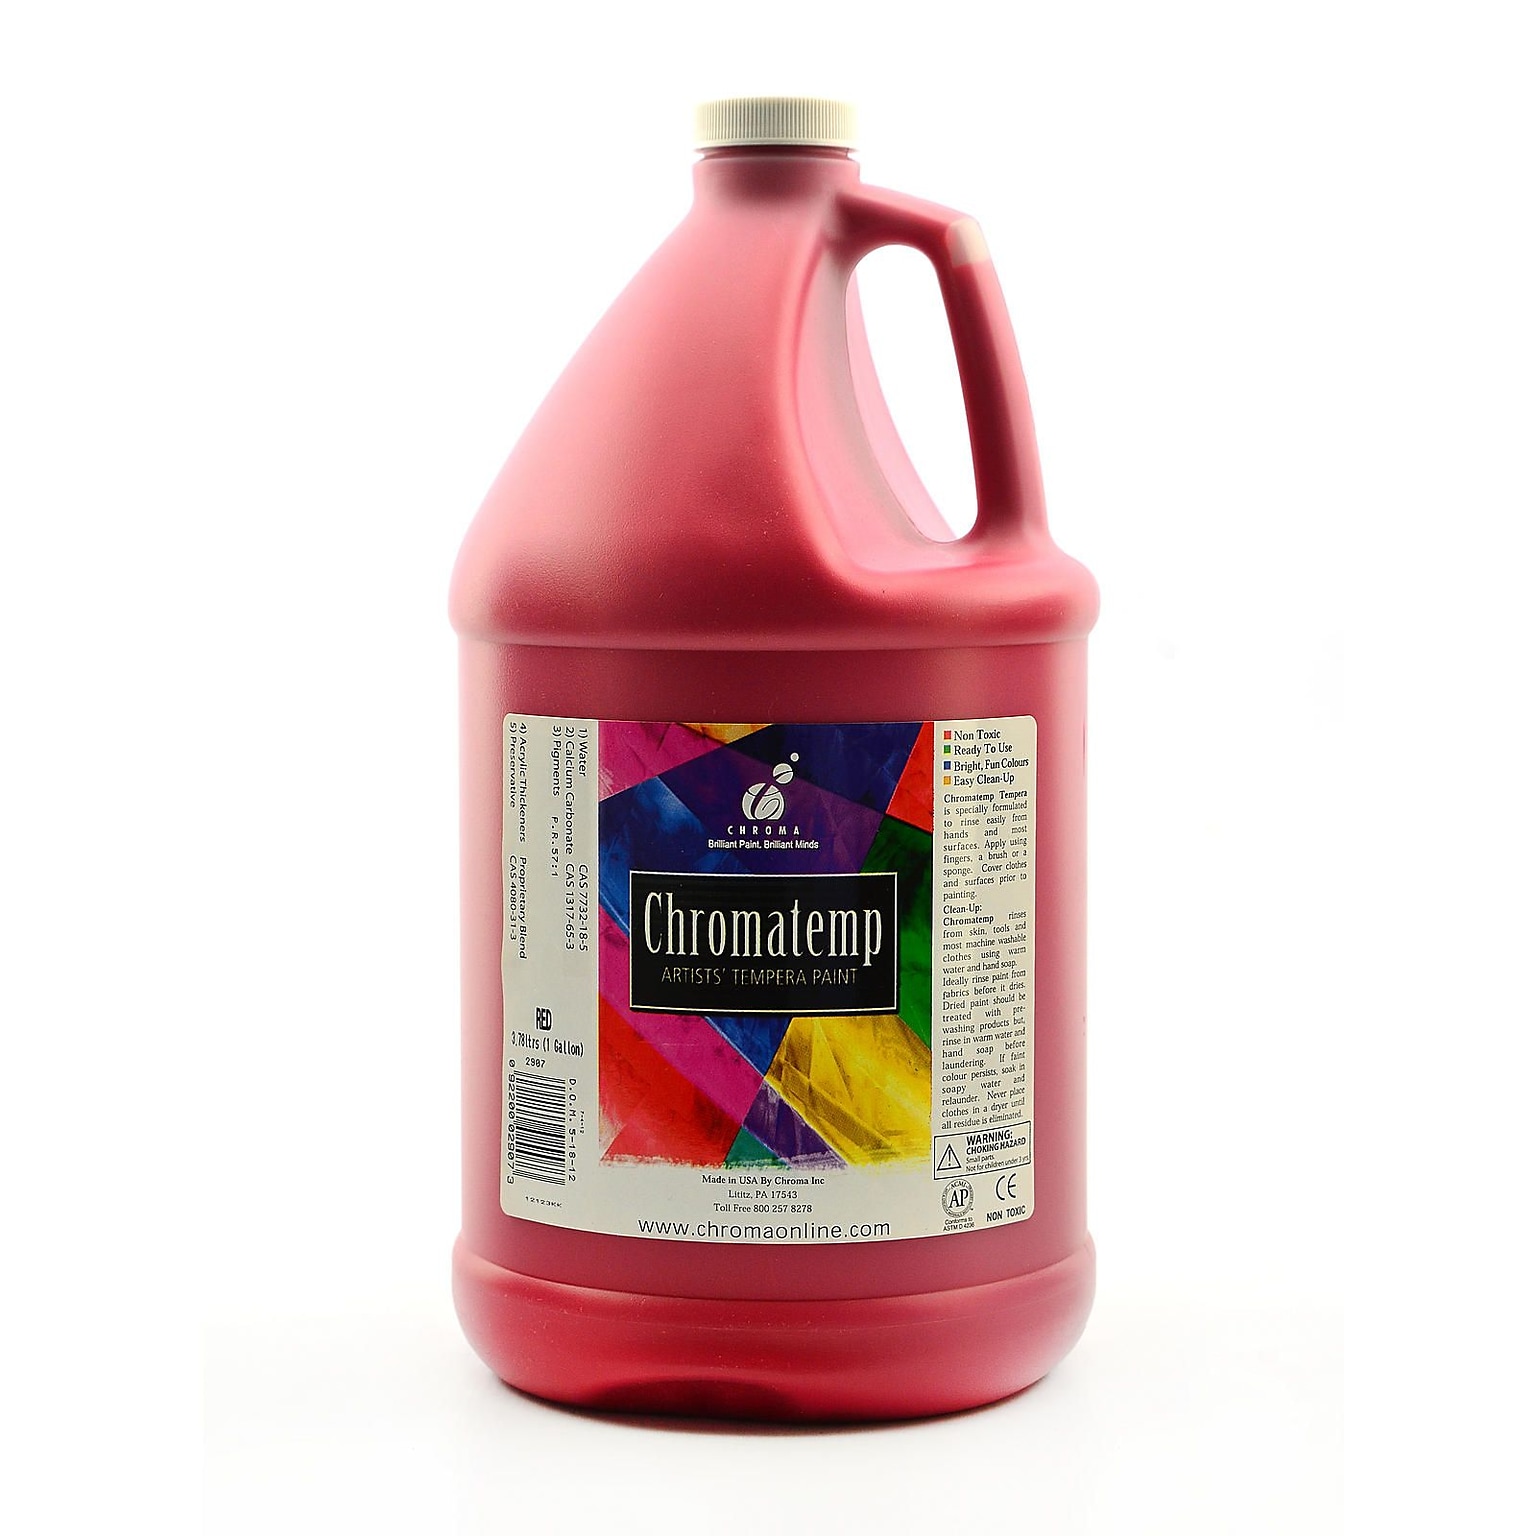 Chroma Inc. Chromatemp Artists Tempera Paint, Red Gallon (55172)